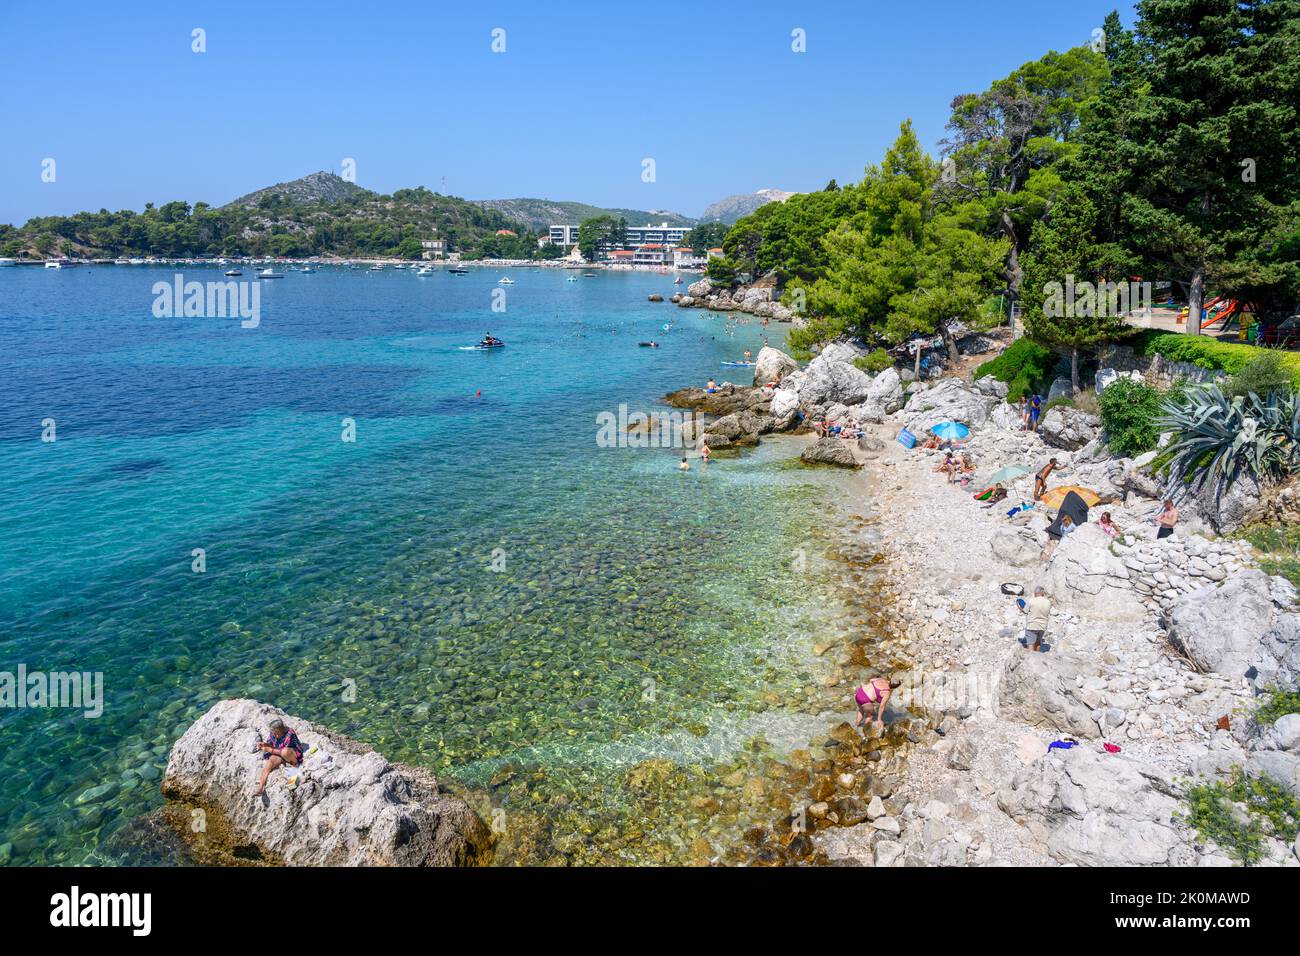 Beach at Mlini, near Dubrovnik, Croata Stock Photo